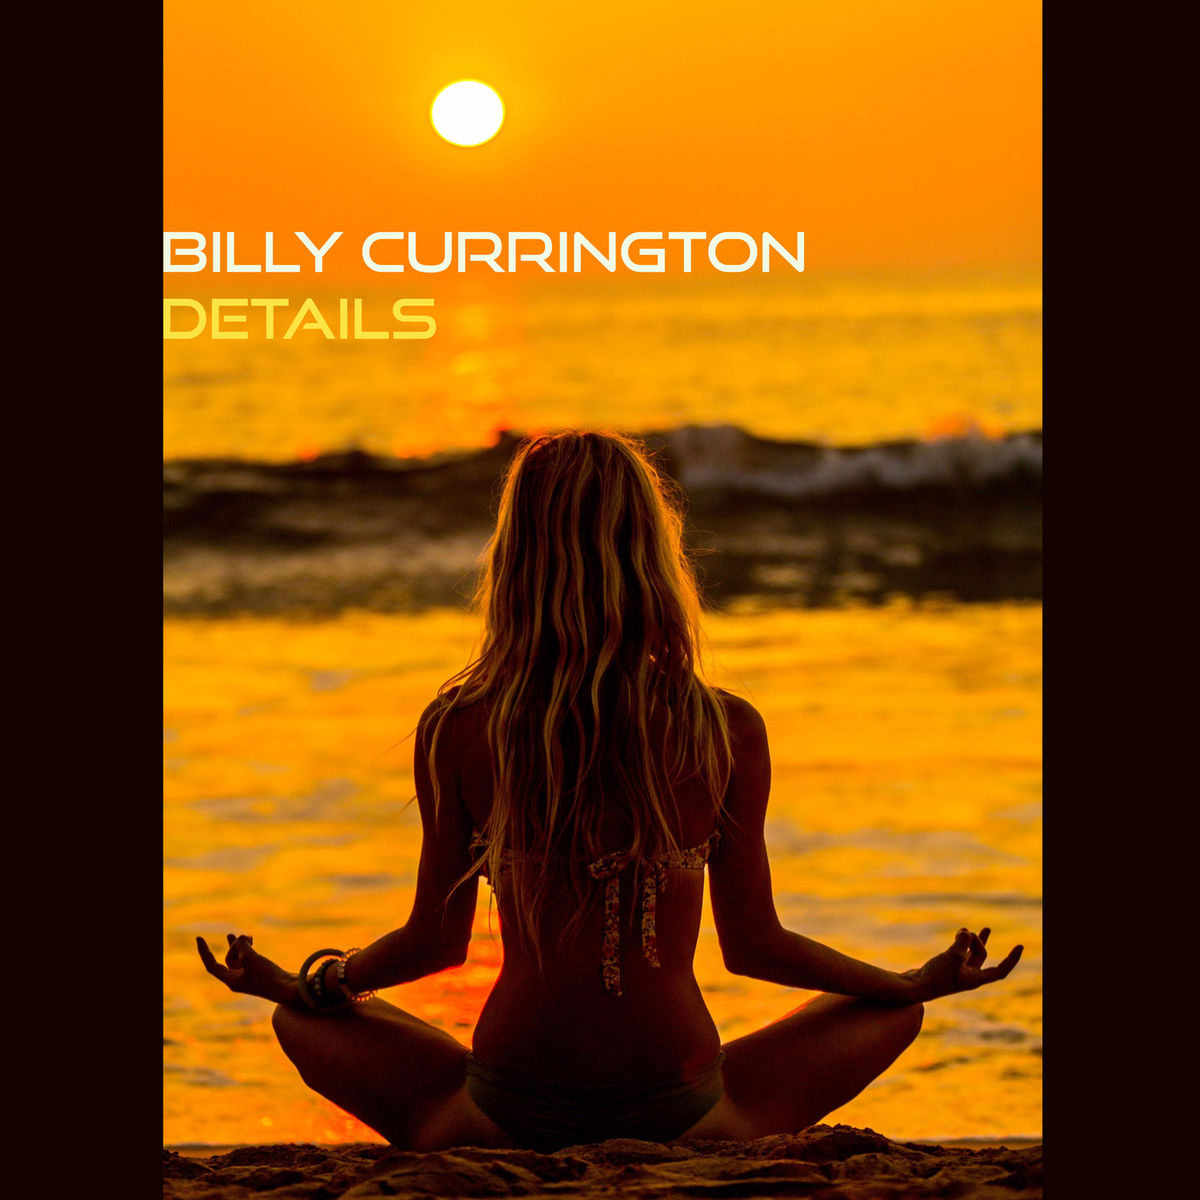 Billy Currington - Details